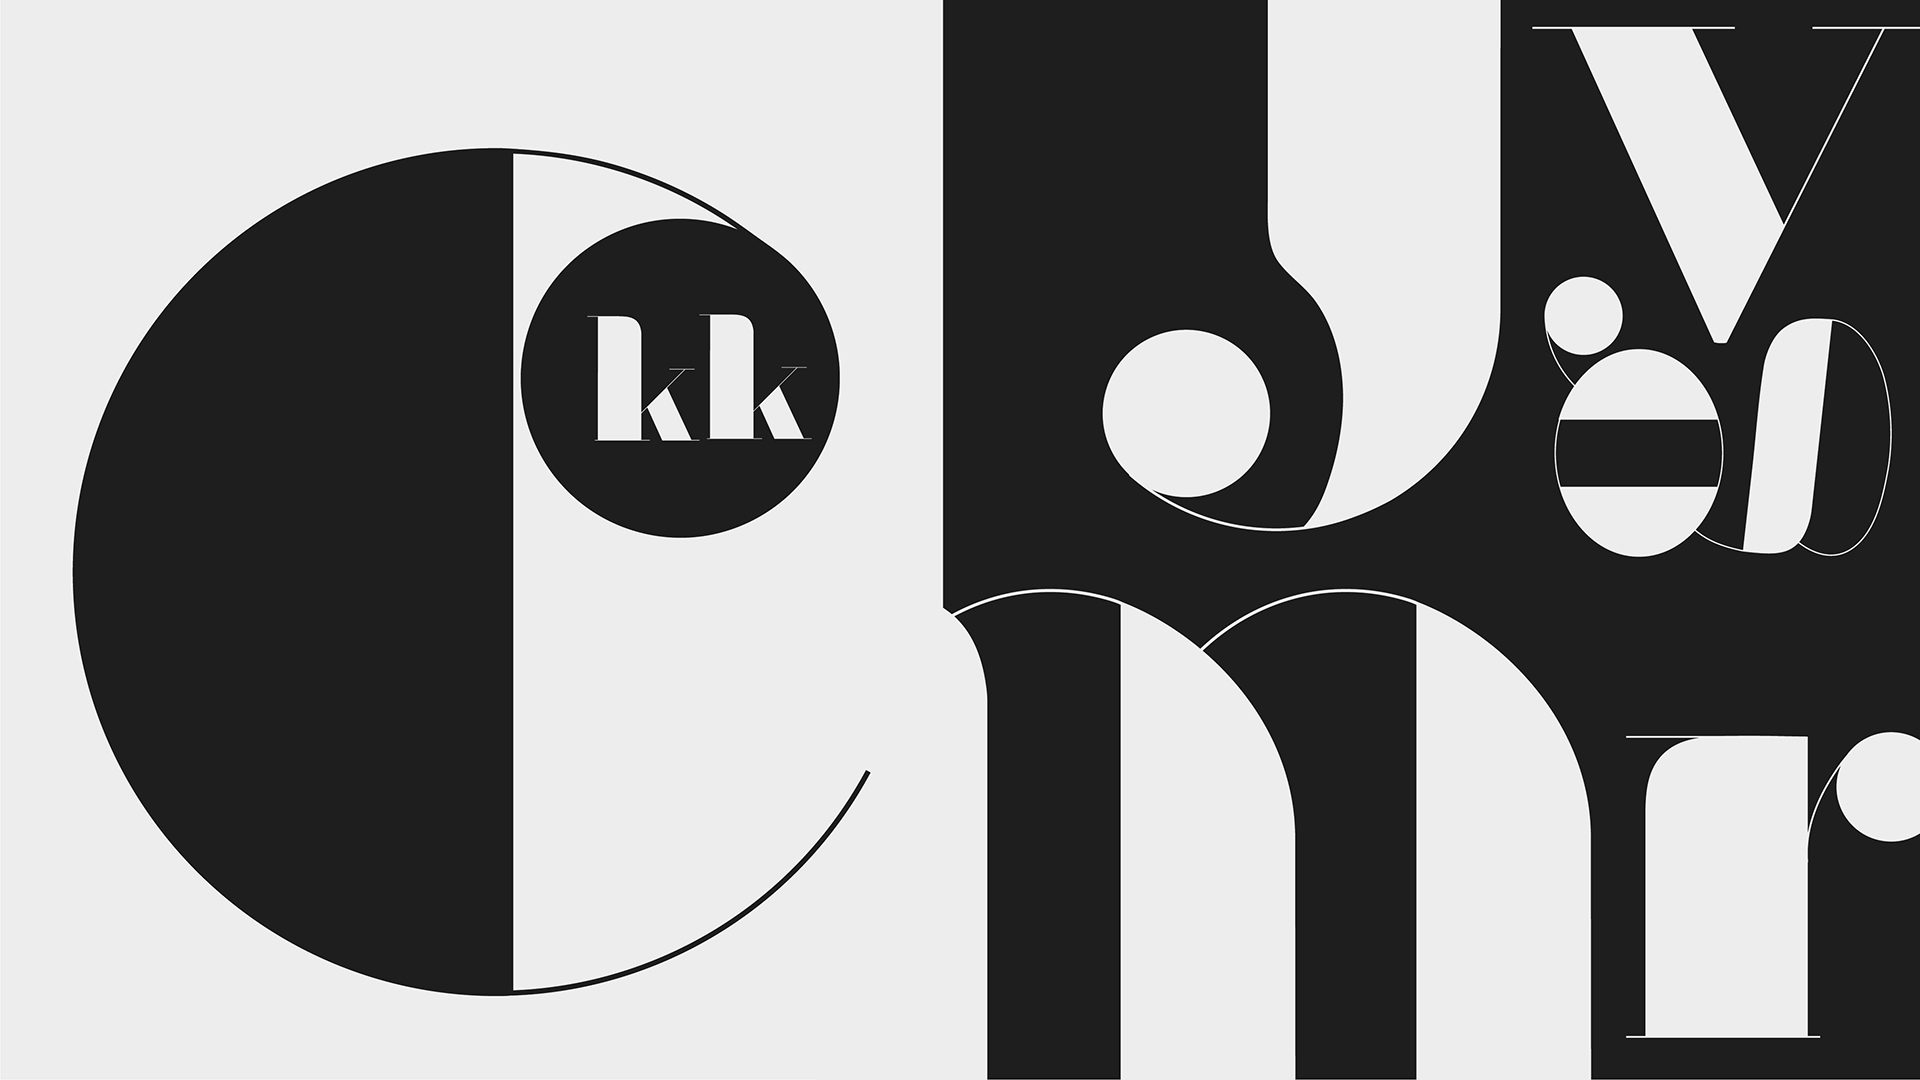 custom serif typeface in black and white